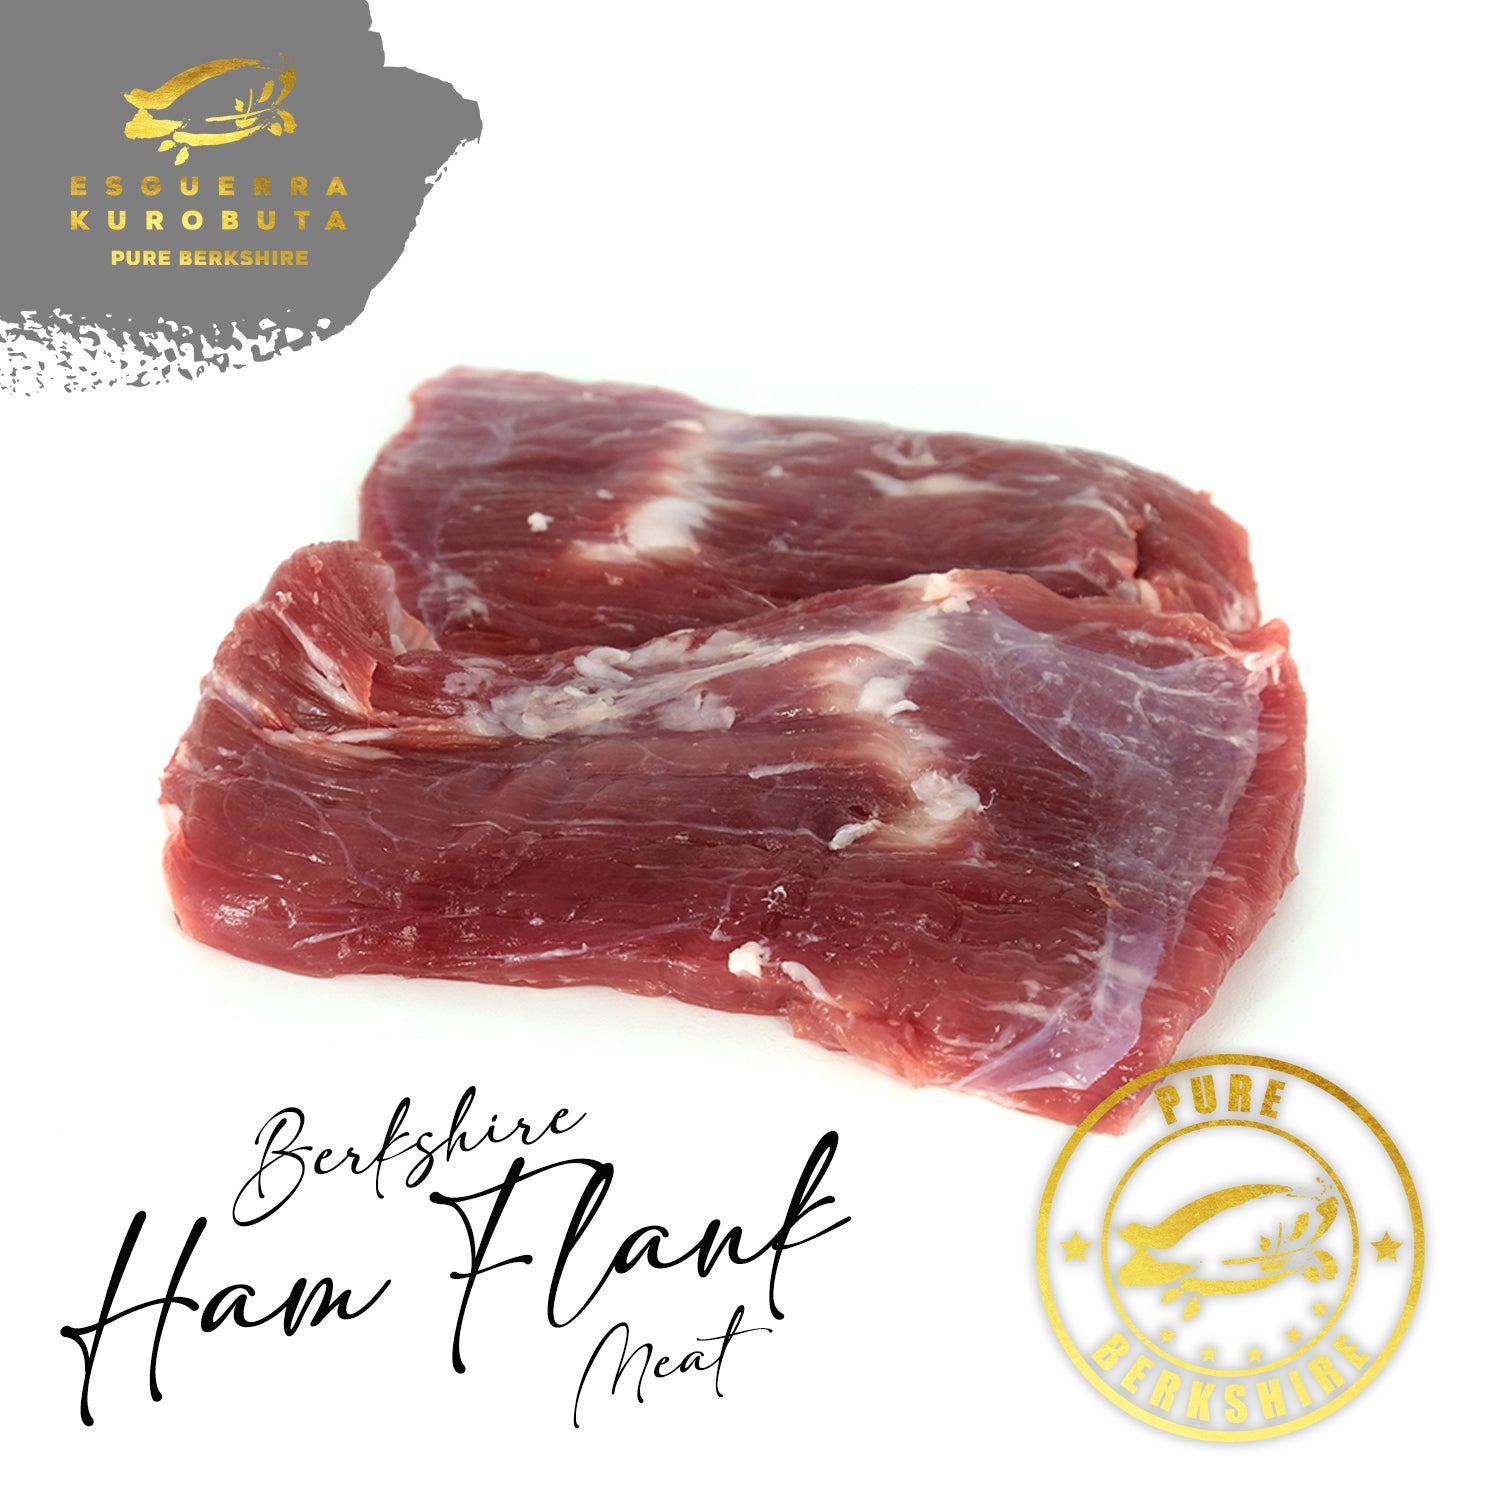 Berkshire Ham Flank Meat